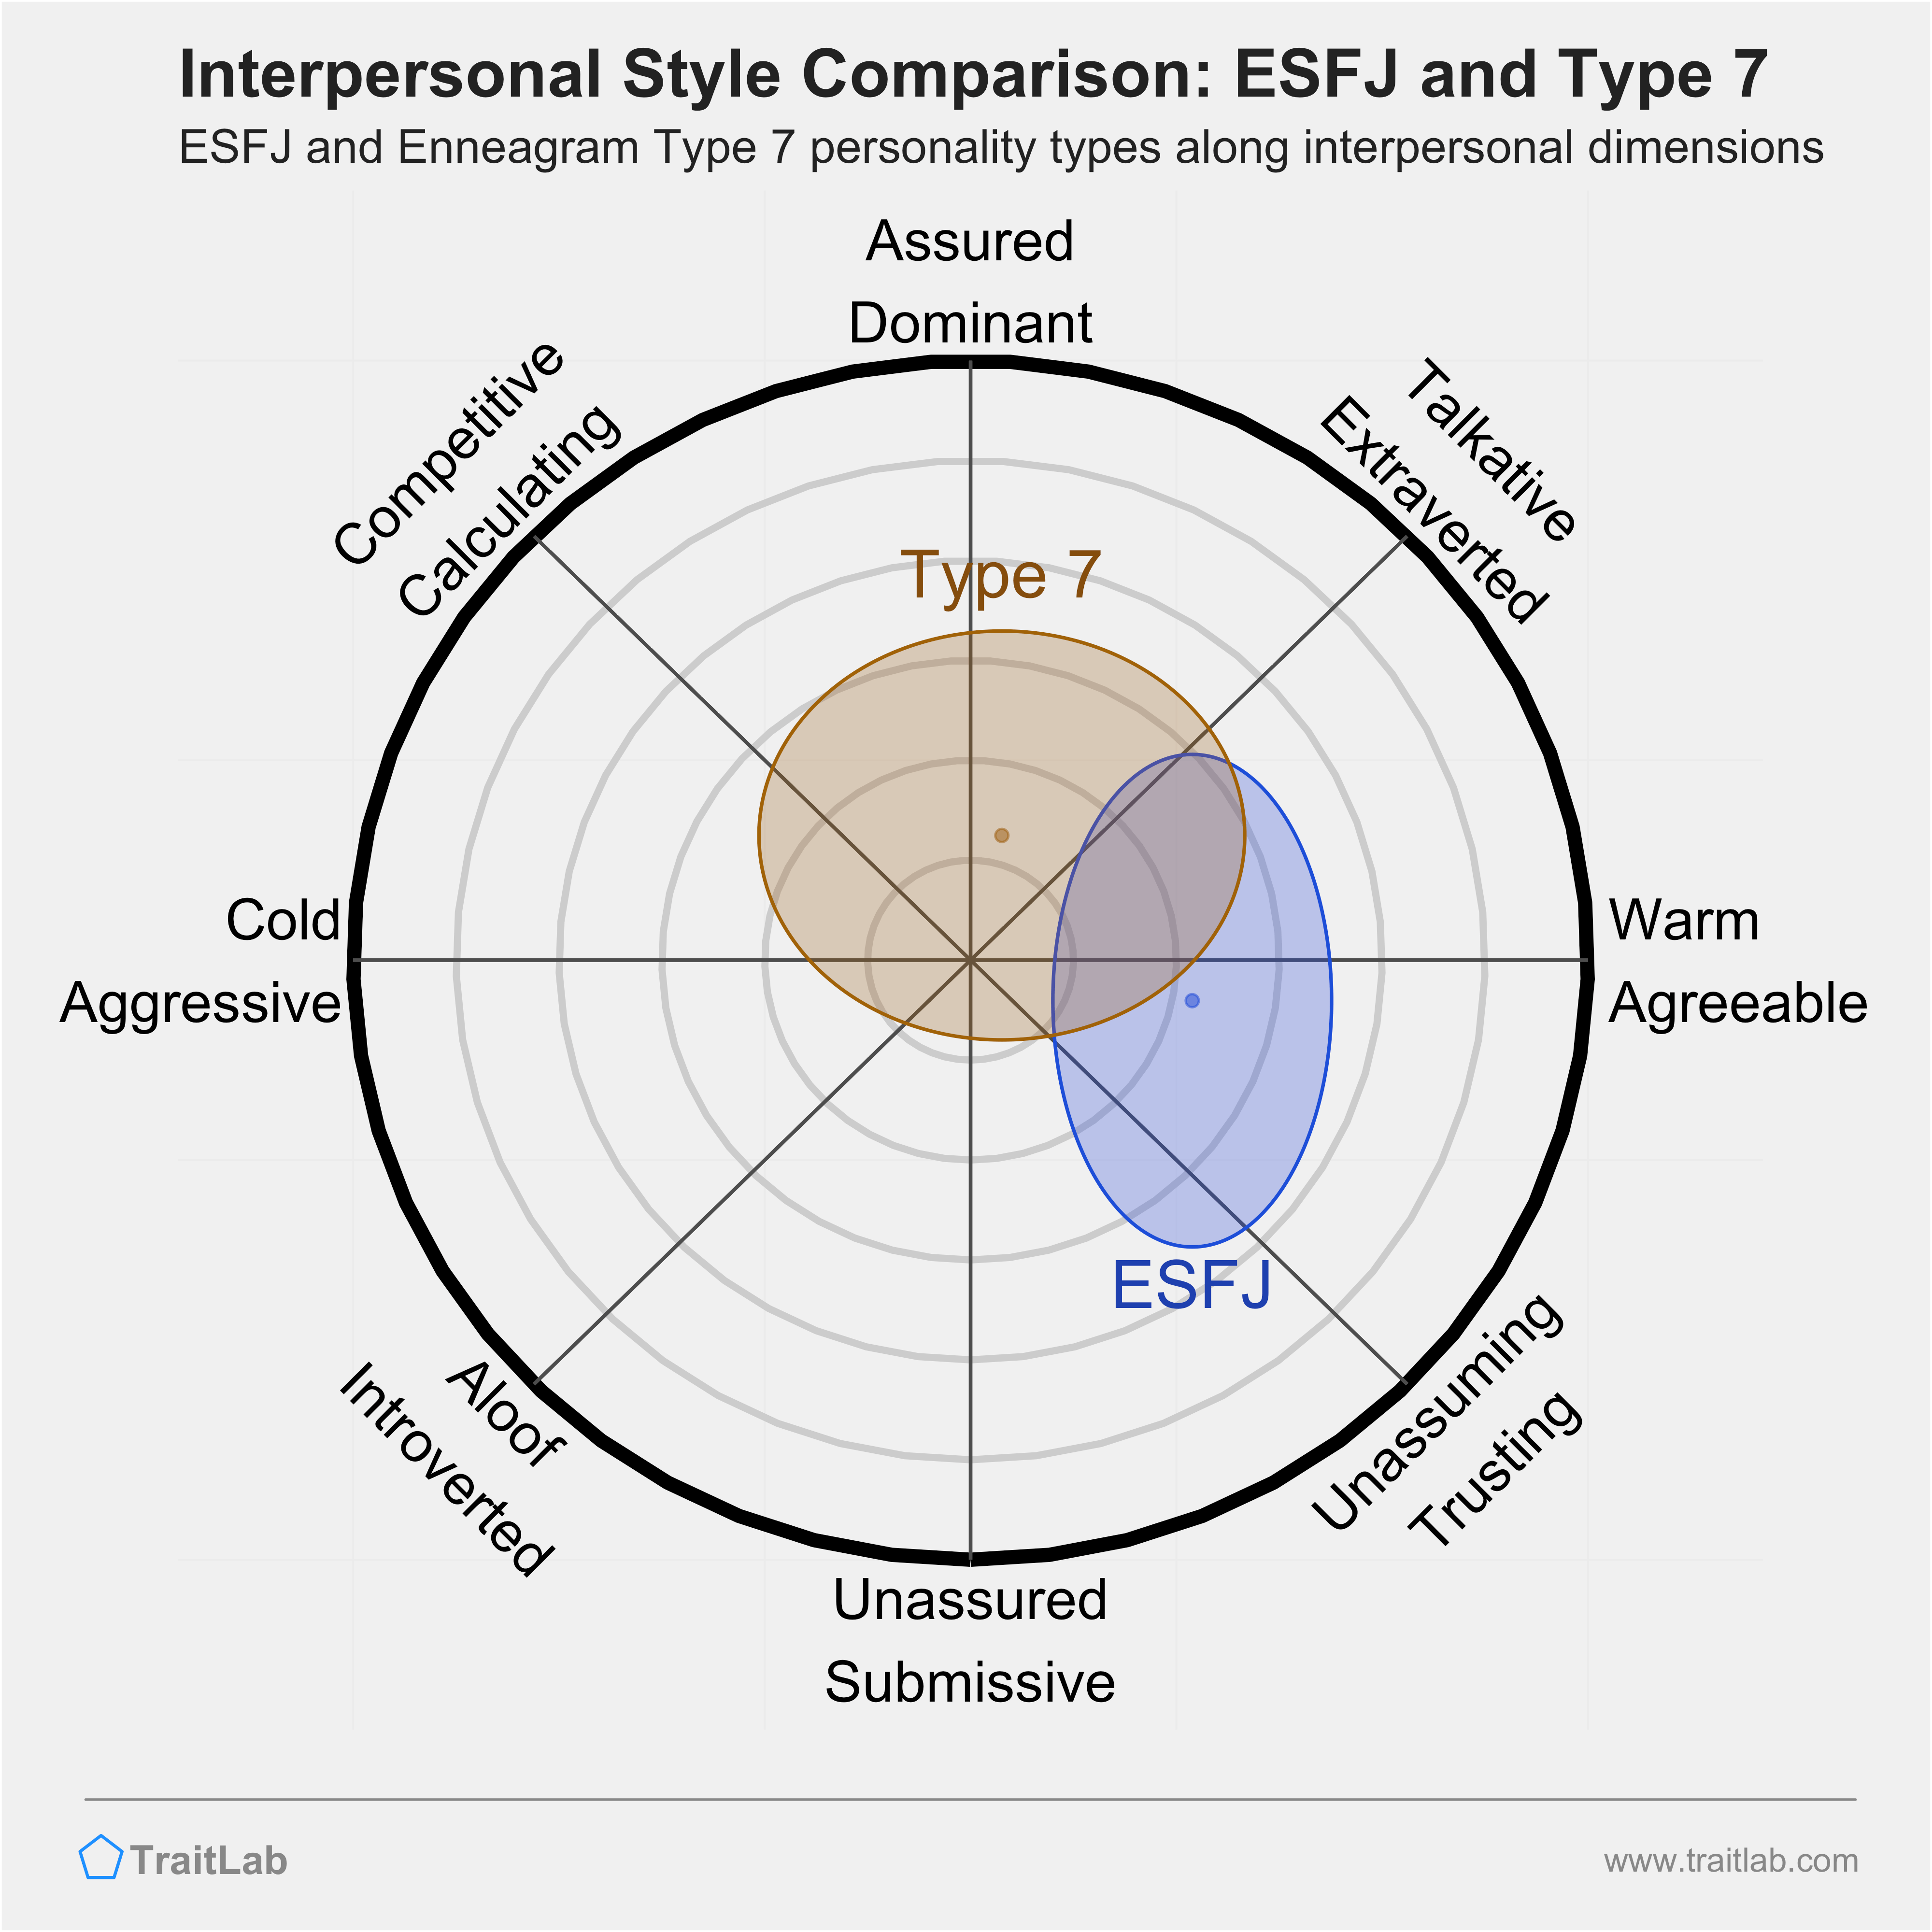 Enneagram ESFJ and Type 7 comparison across interpersonal dimensions